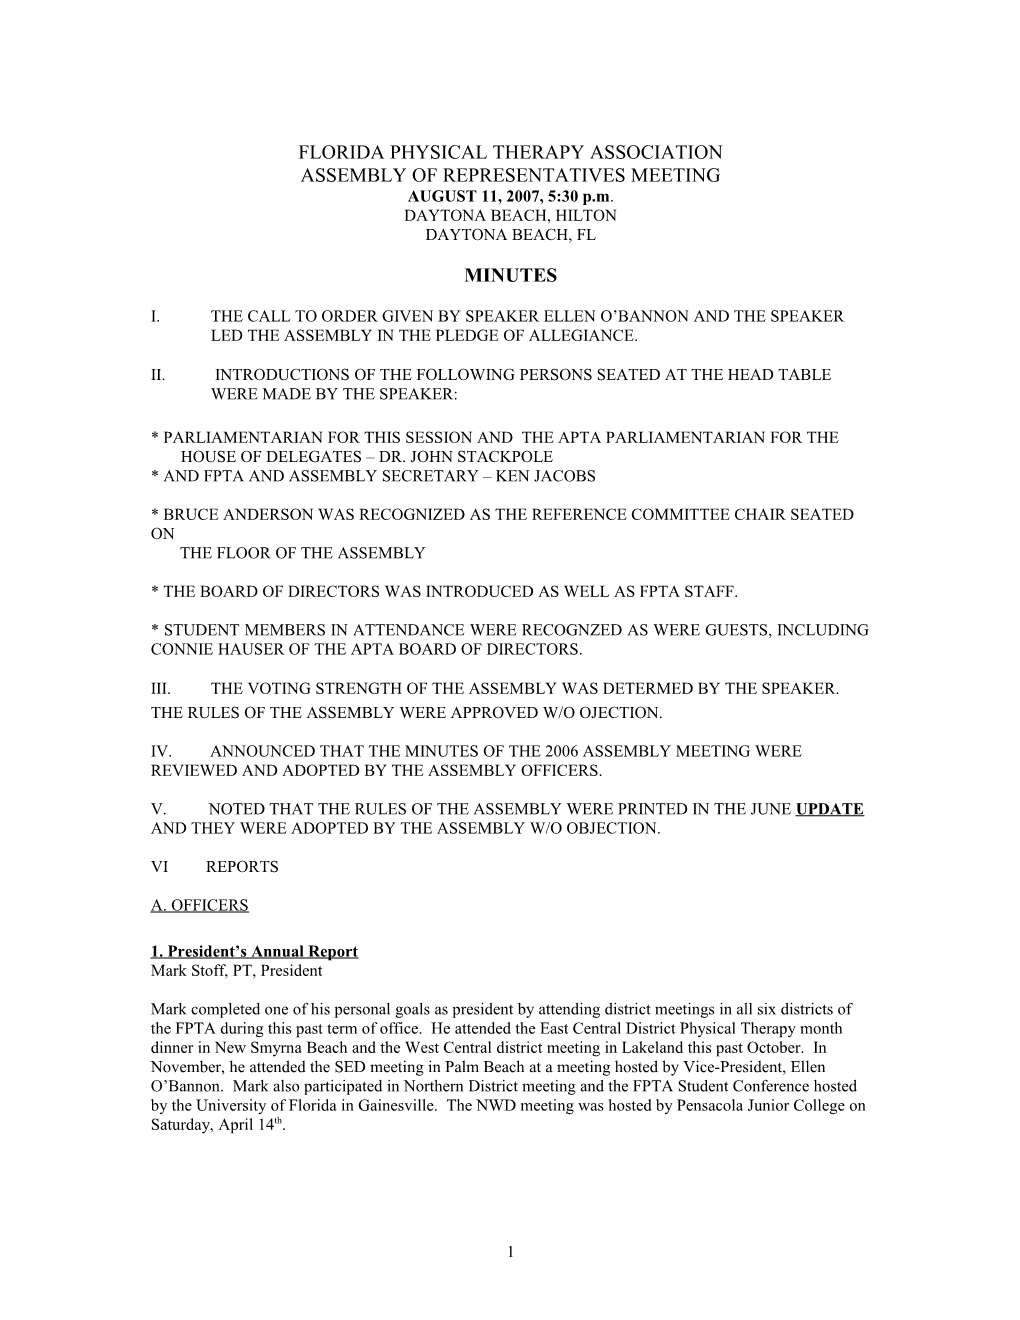 FA 01-07 the Board of Directors (And the Legislative Panel) Moves Adoption of the 2008